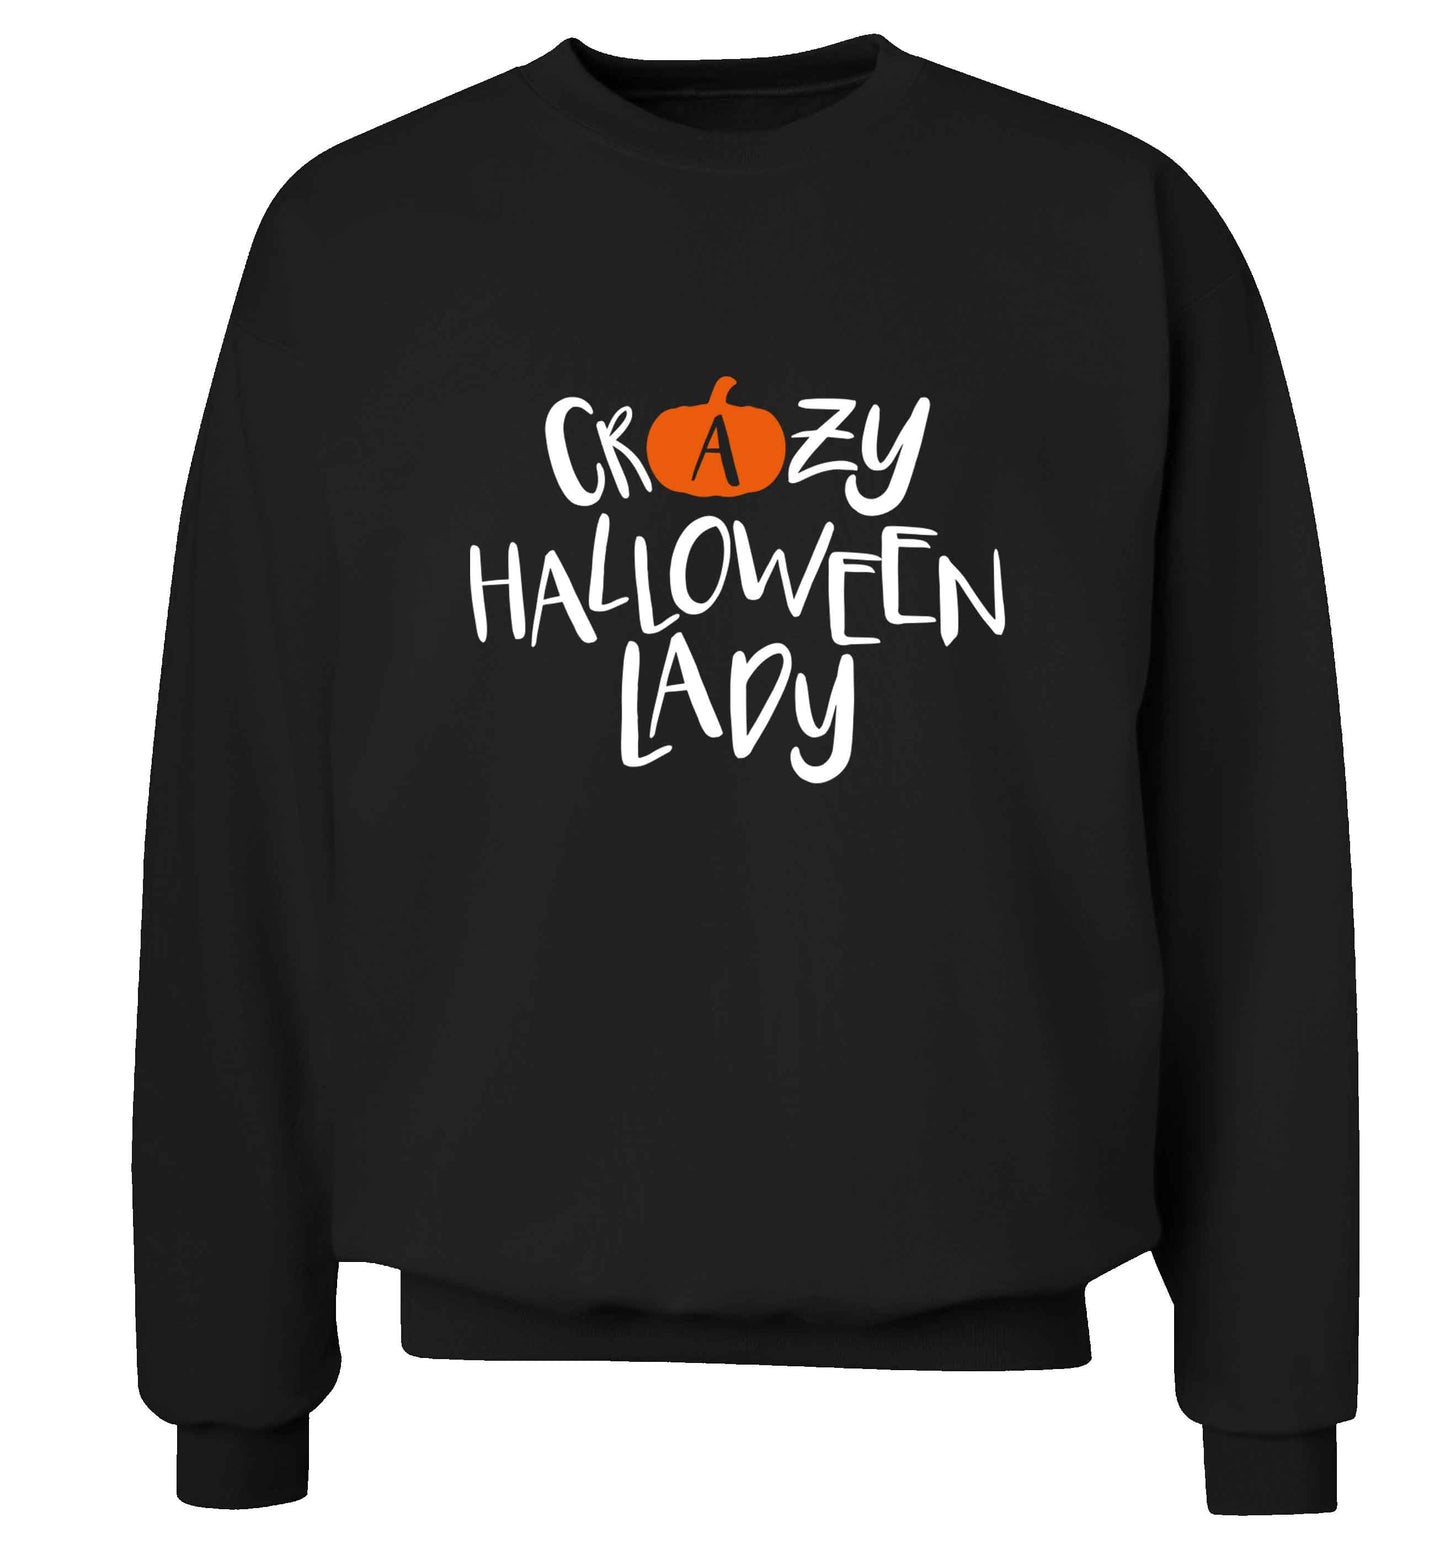 Crazy halloween lady adult's unisex black sweater 2XL